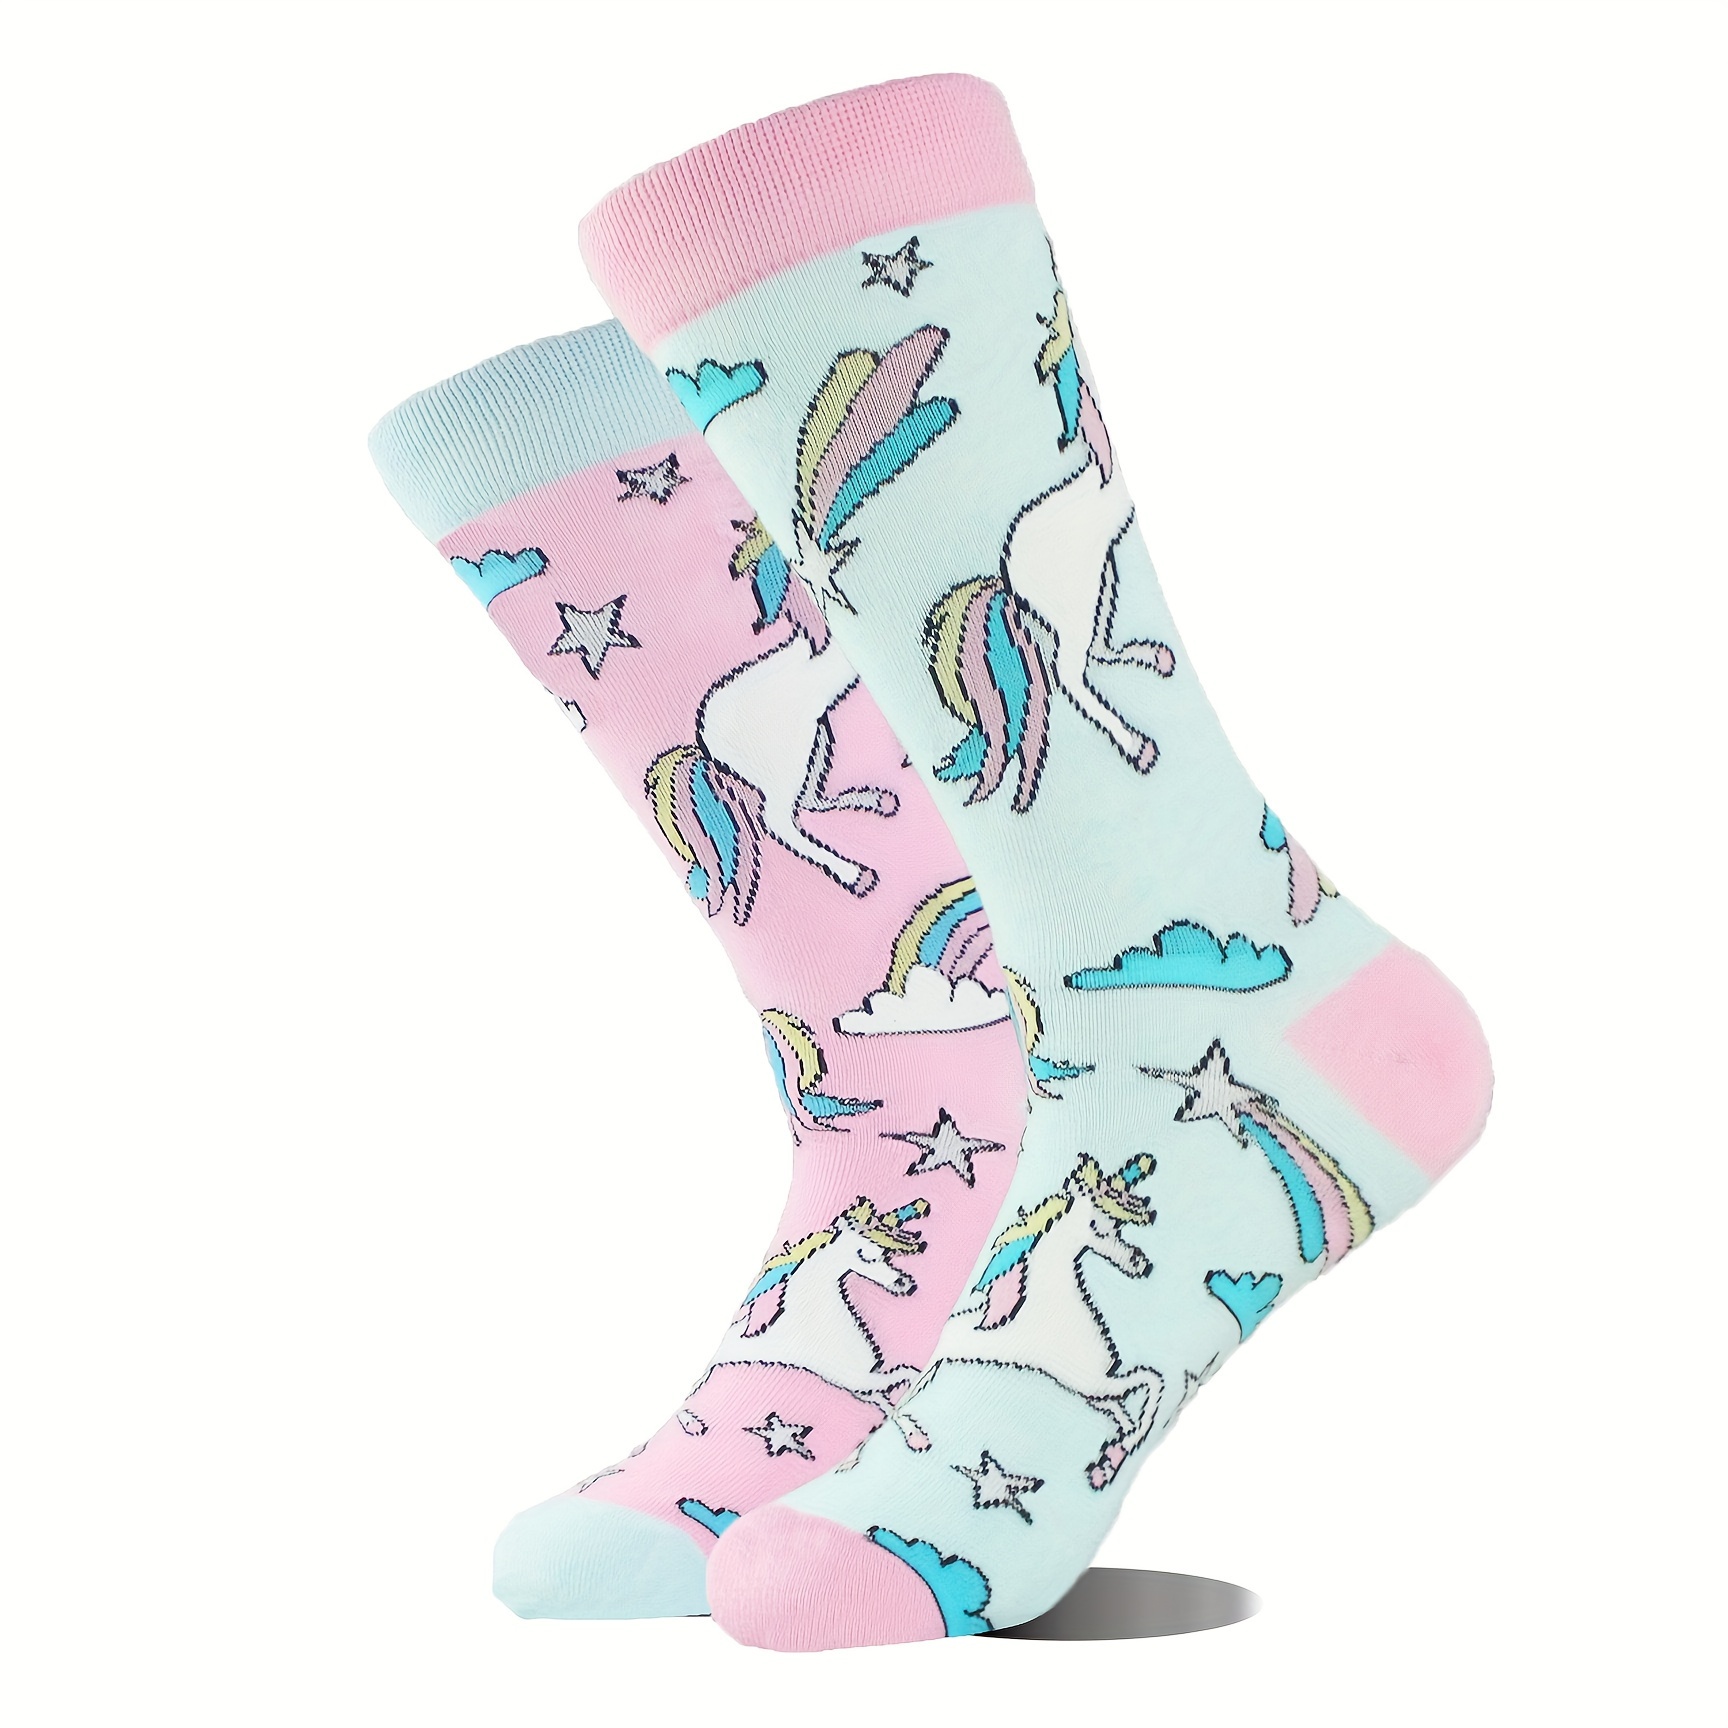 

1 Pair Of Unisex Cotton Fashion Novelty Socks, Funny Cartoon Horse Patterned Men Women Gift Socks, For Outdoor Wearing & All Seasons Wearing